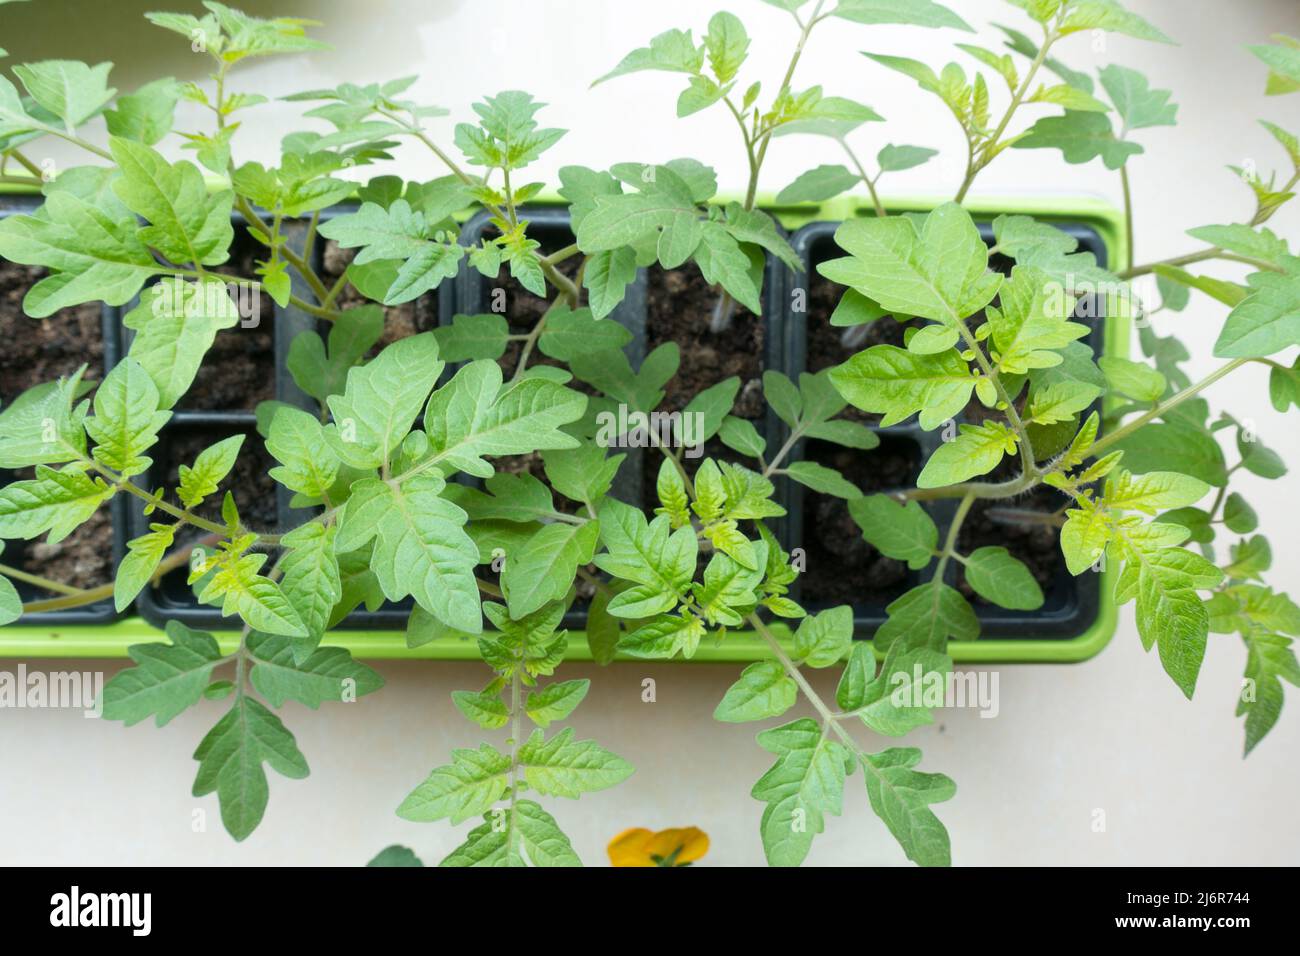 Tomato plants / Solanum lycopersicum in propogator inside house Stock Photo